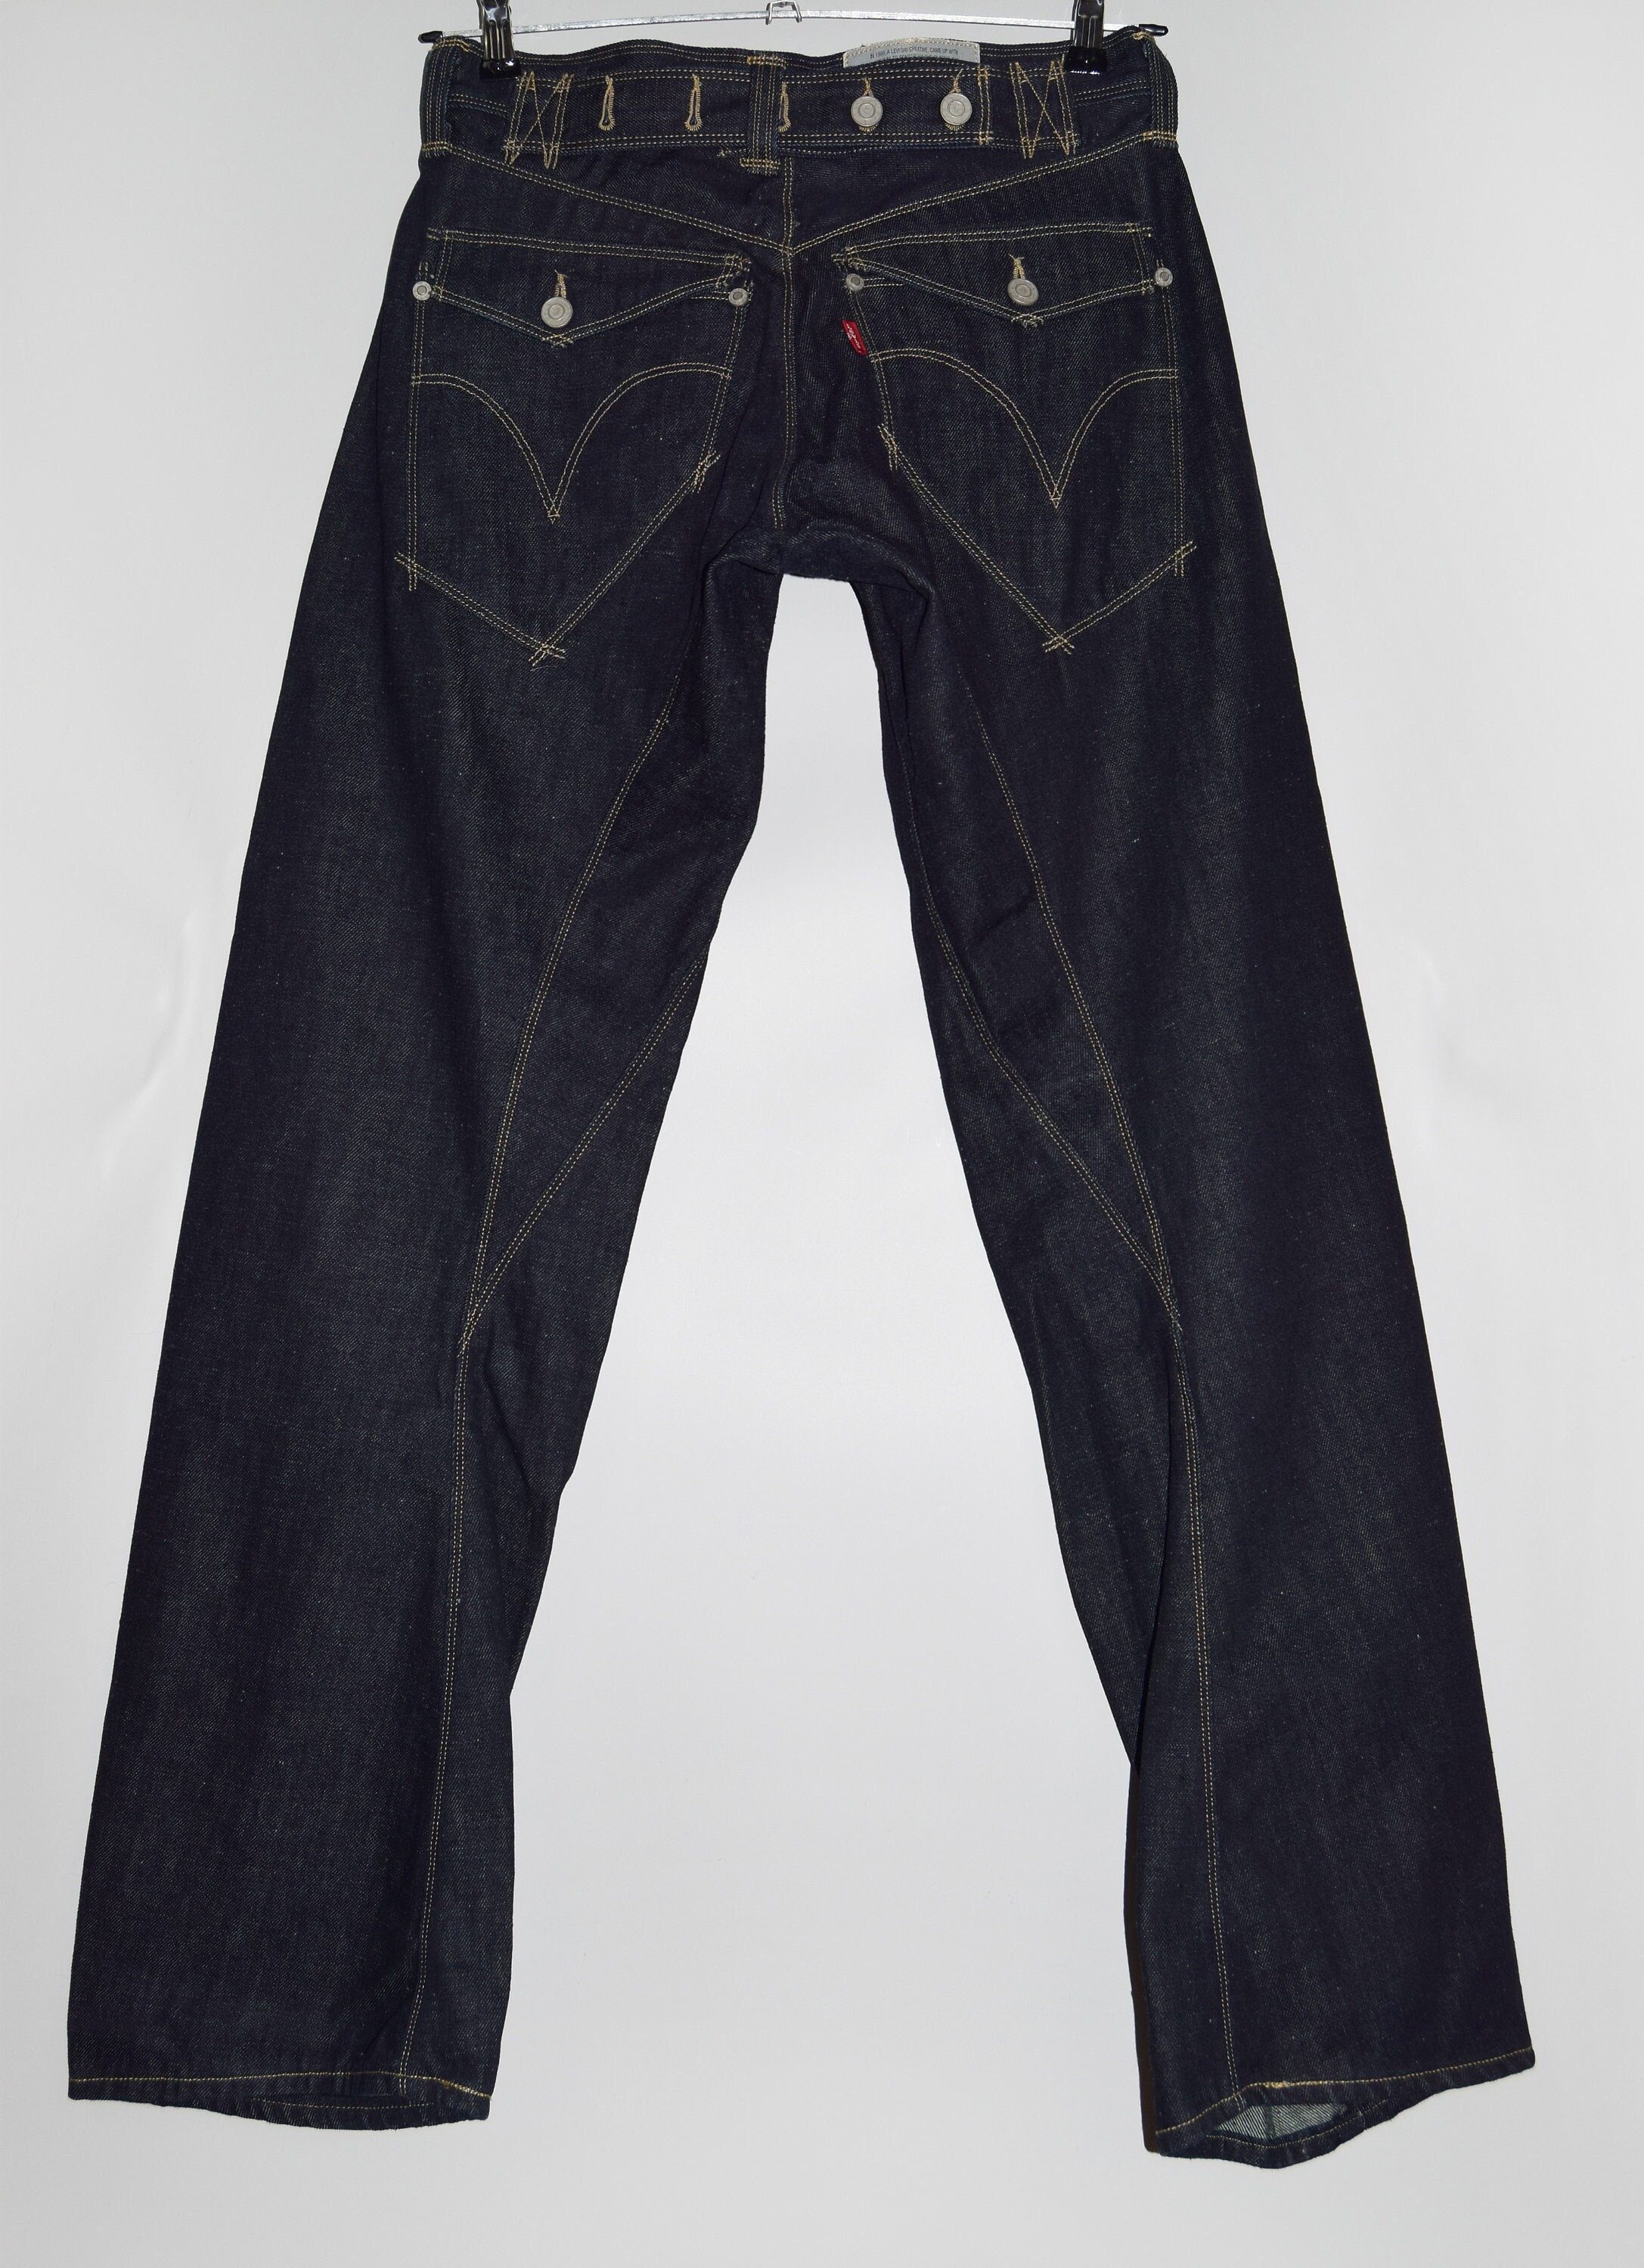 Levis Engineered Twisted Jeans Size 28 Dark Navy the Leg Twist - Etsy